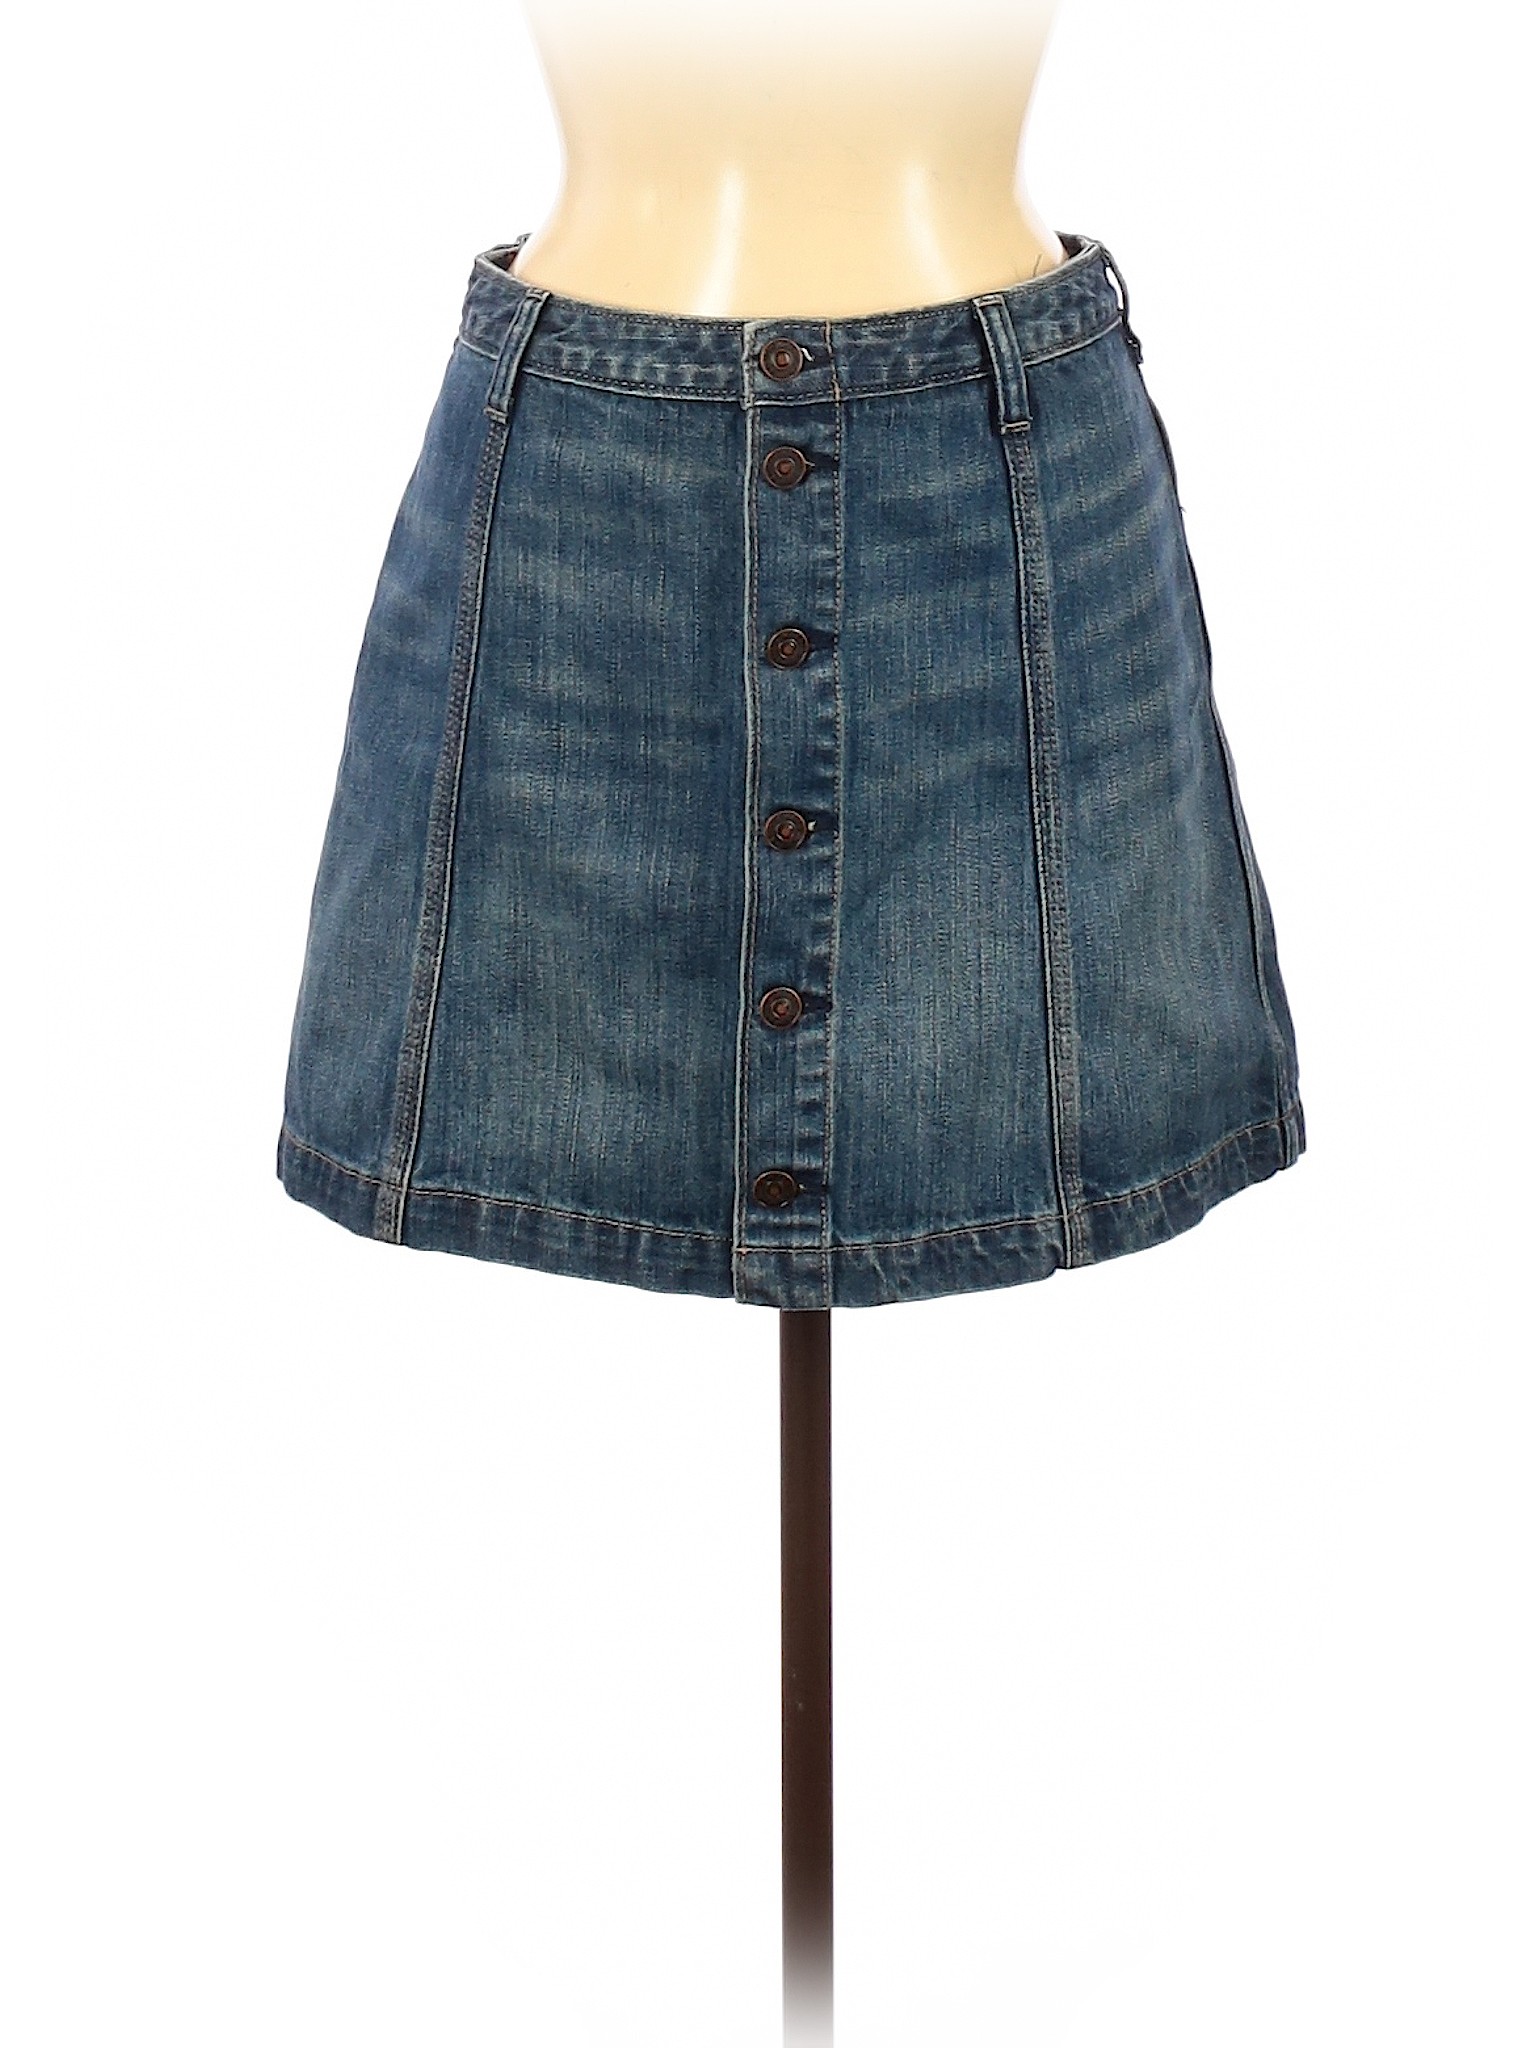 Abercrombie & Fitch Women Blue Denim Skirt 6 | eBay